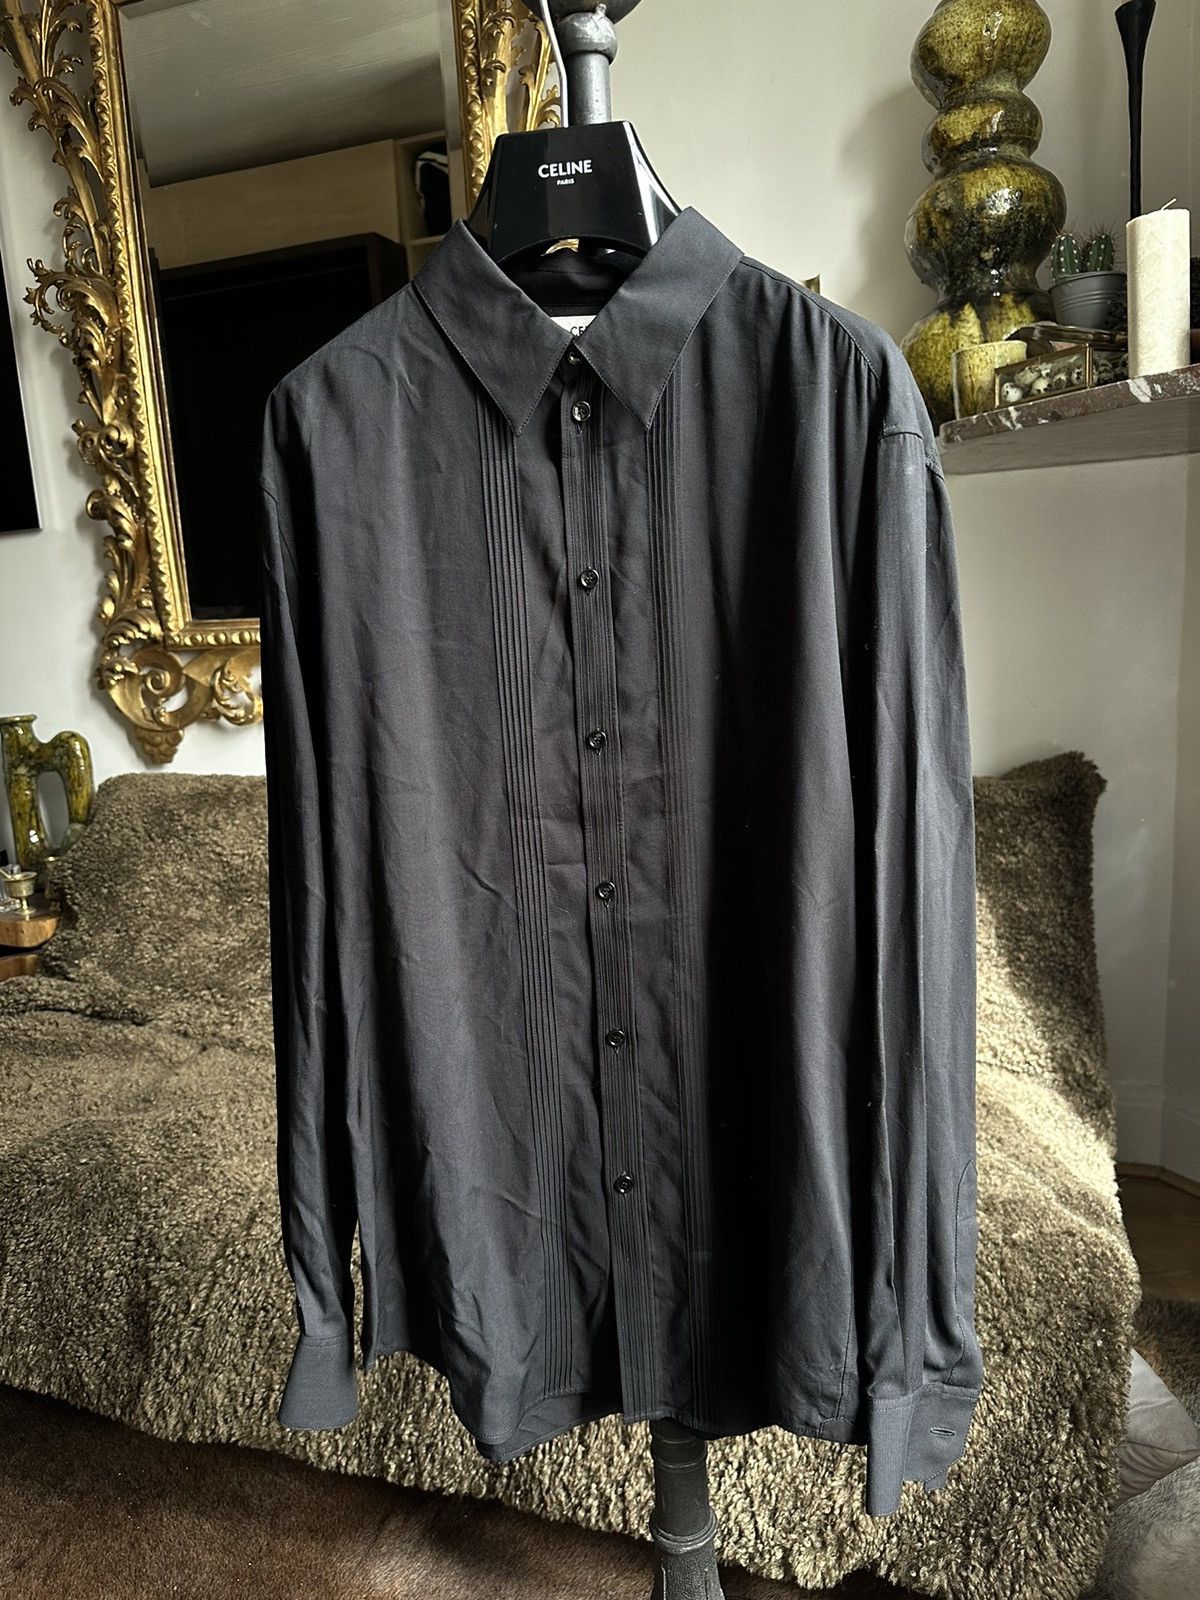 image of Celine Hedi Slimane Shirt in Black, Men's (Size Small)